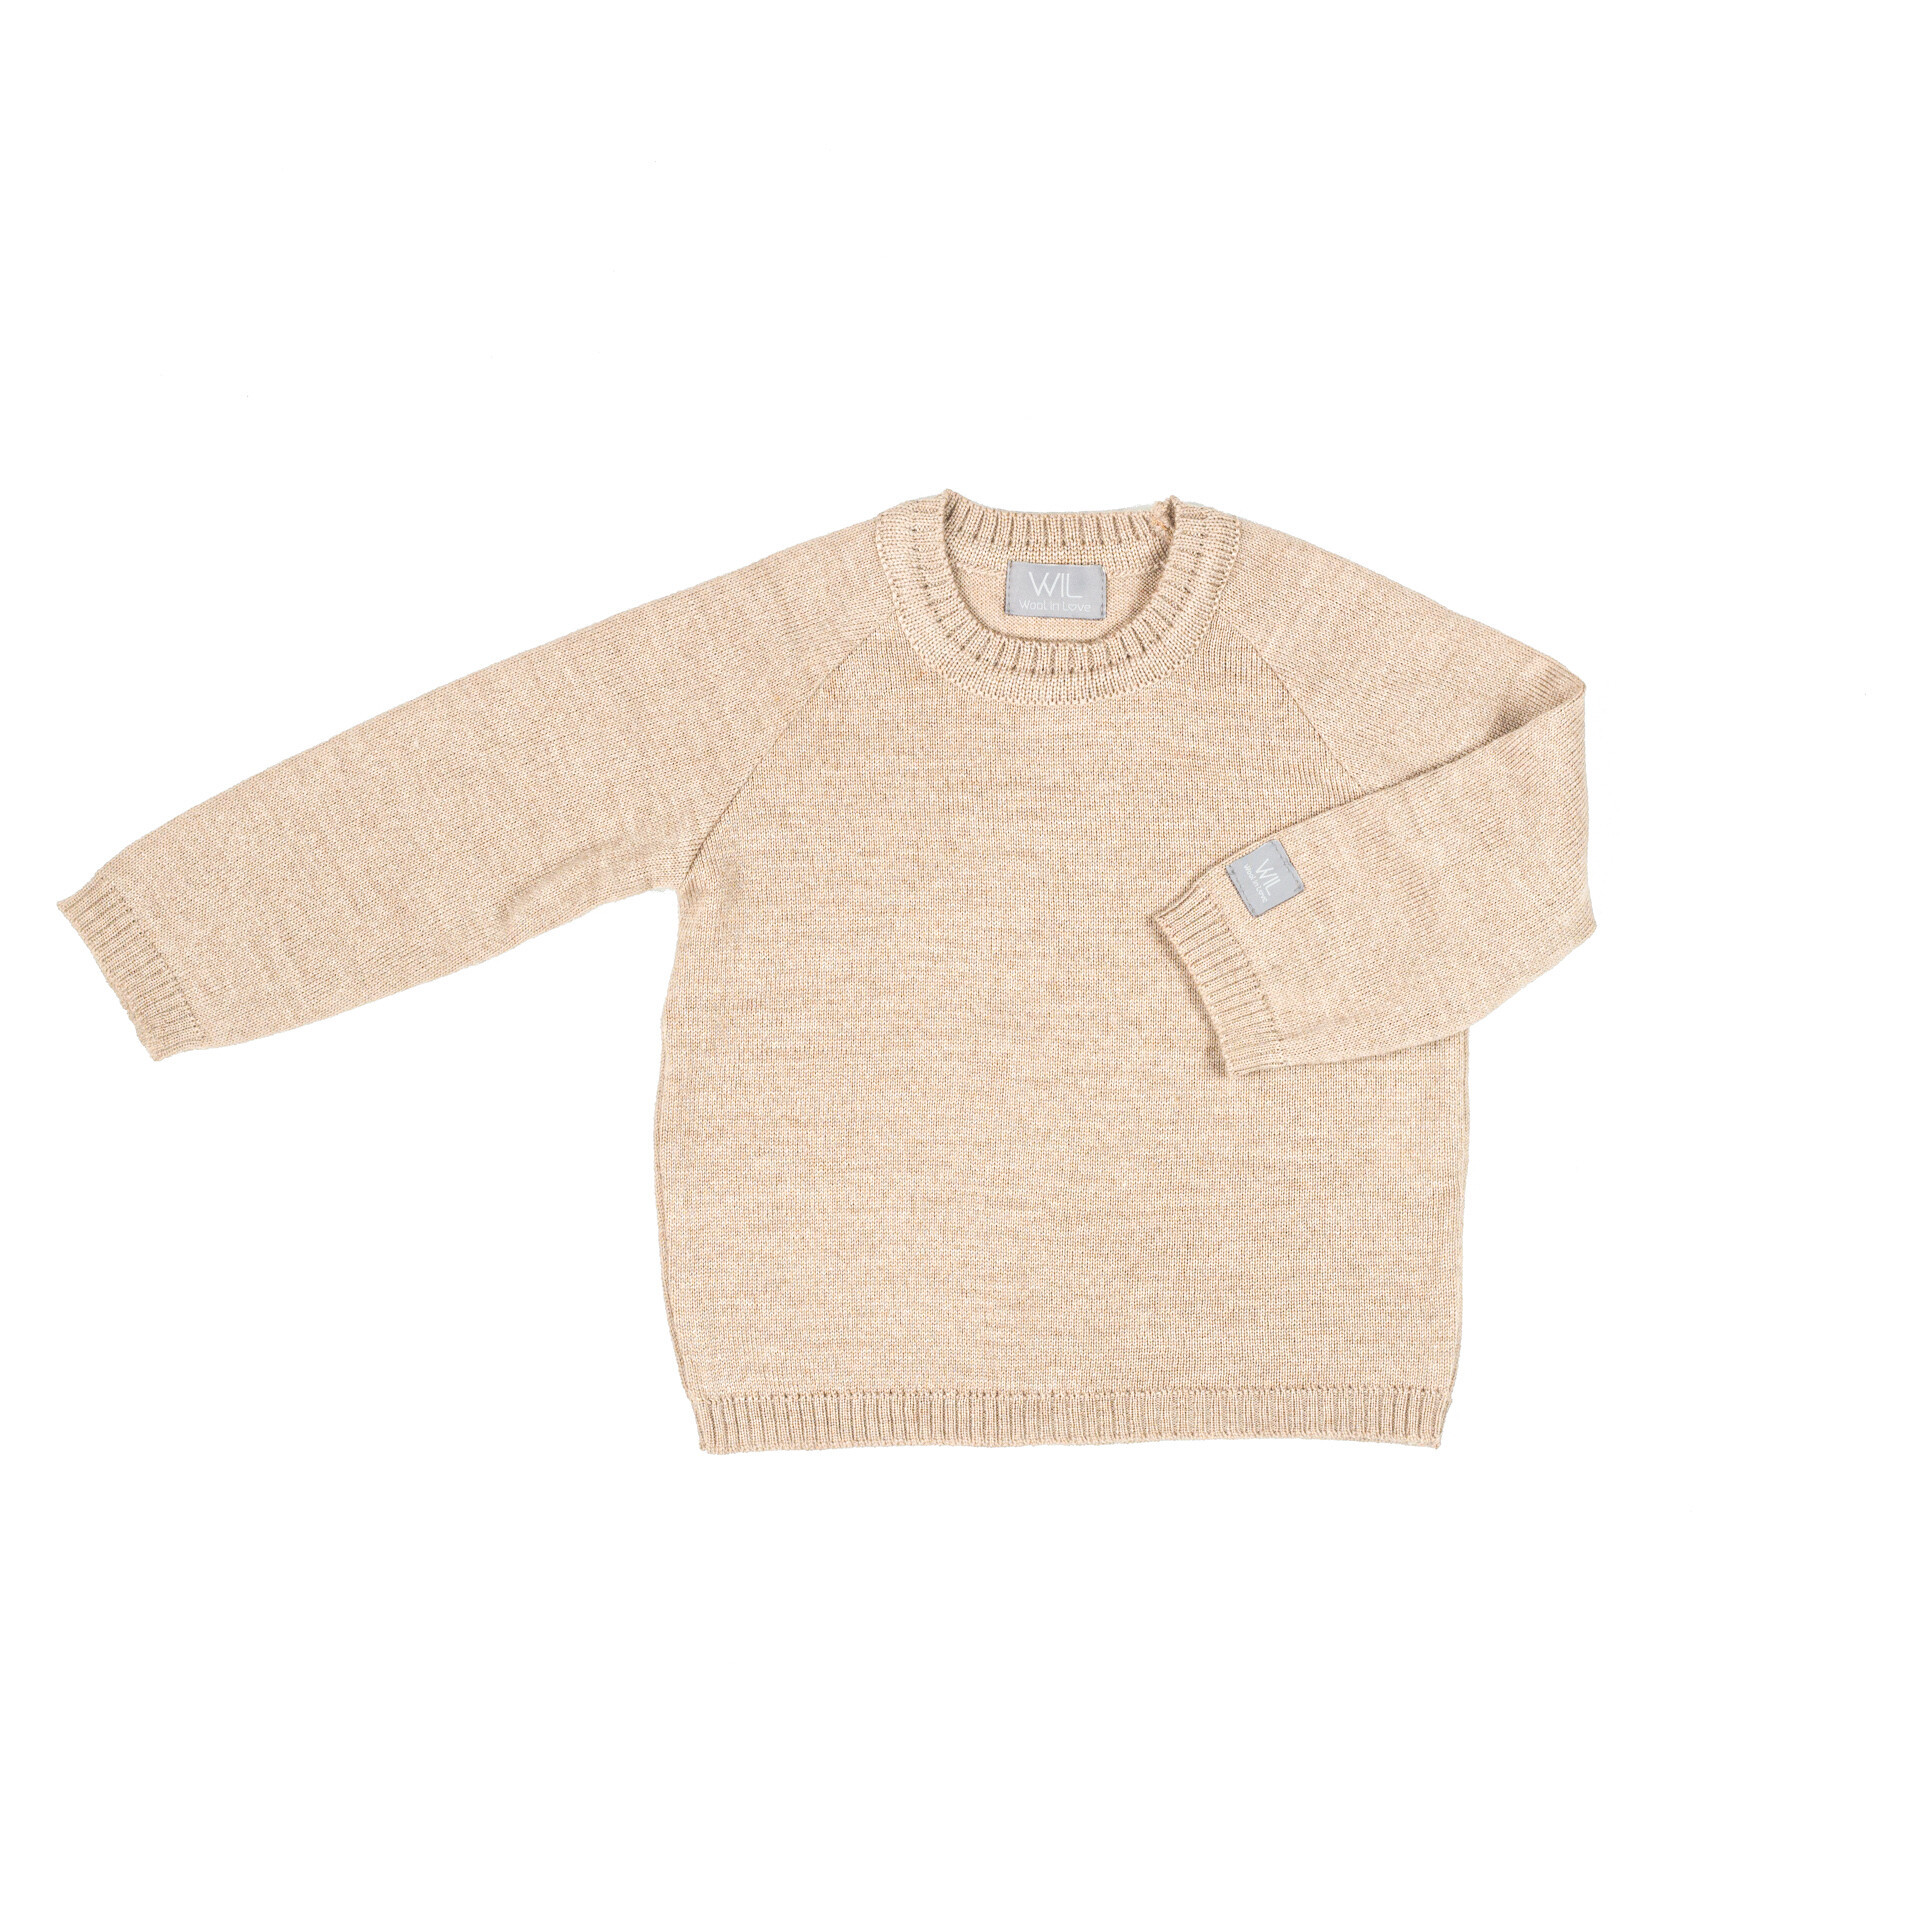 Merino sweater JOY - Light Beige  - 68